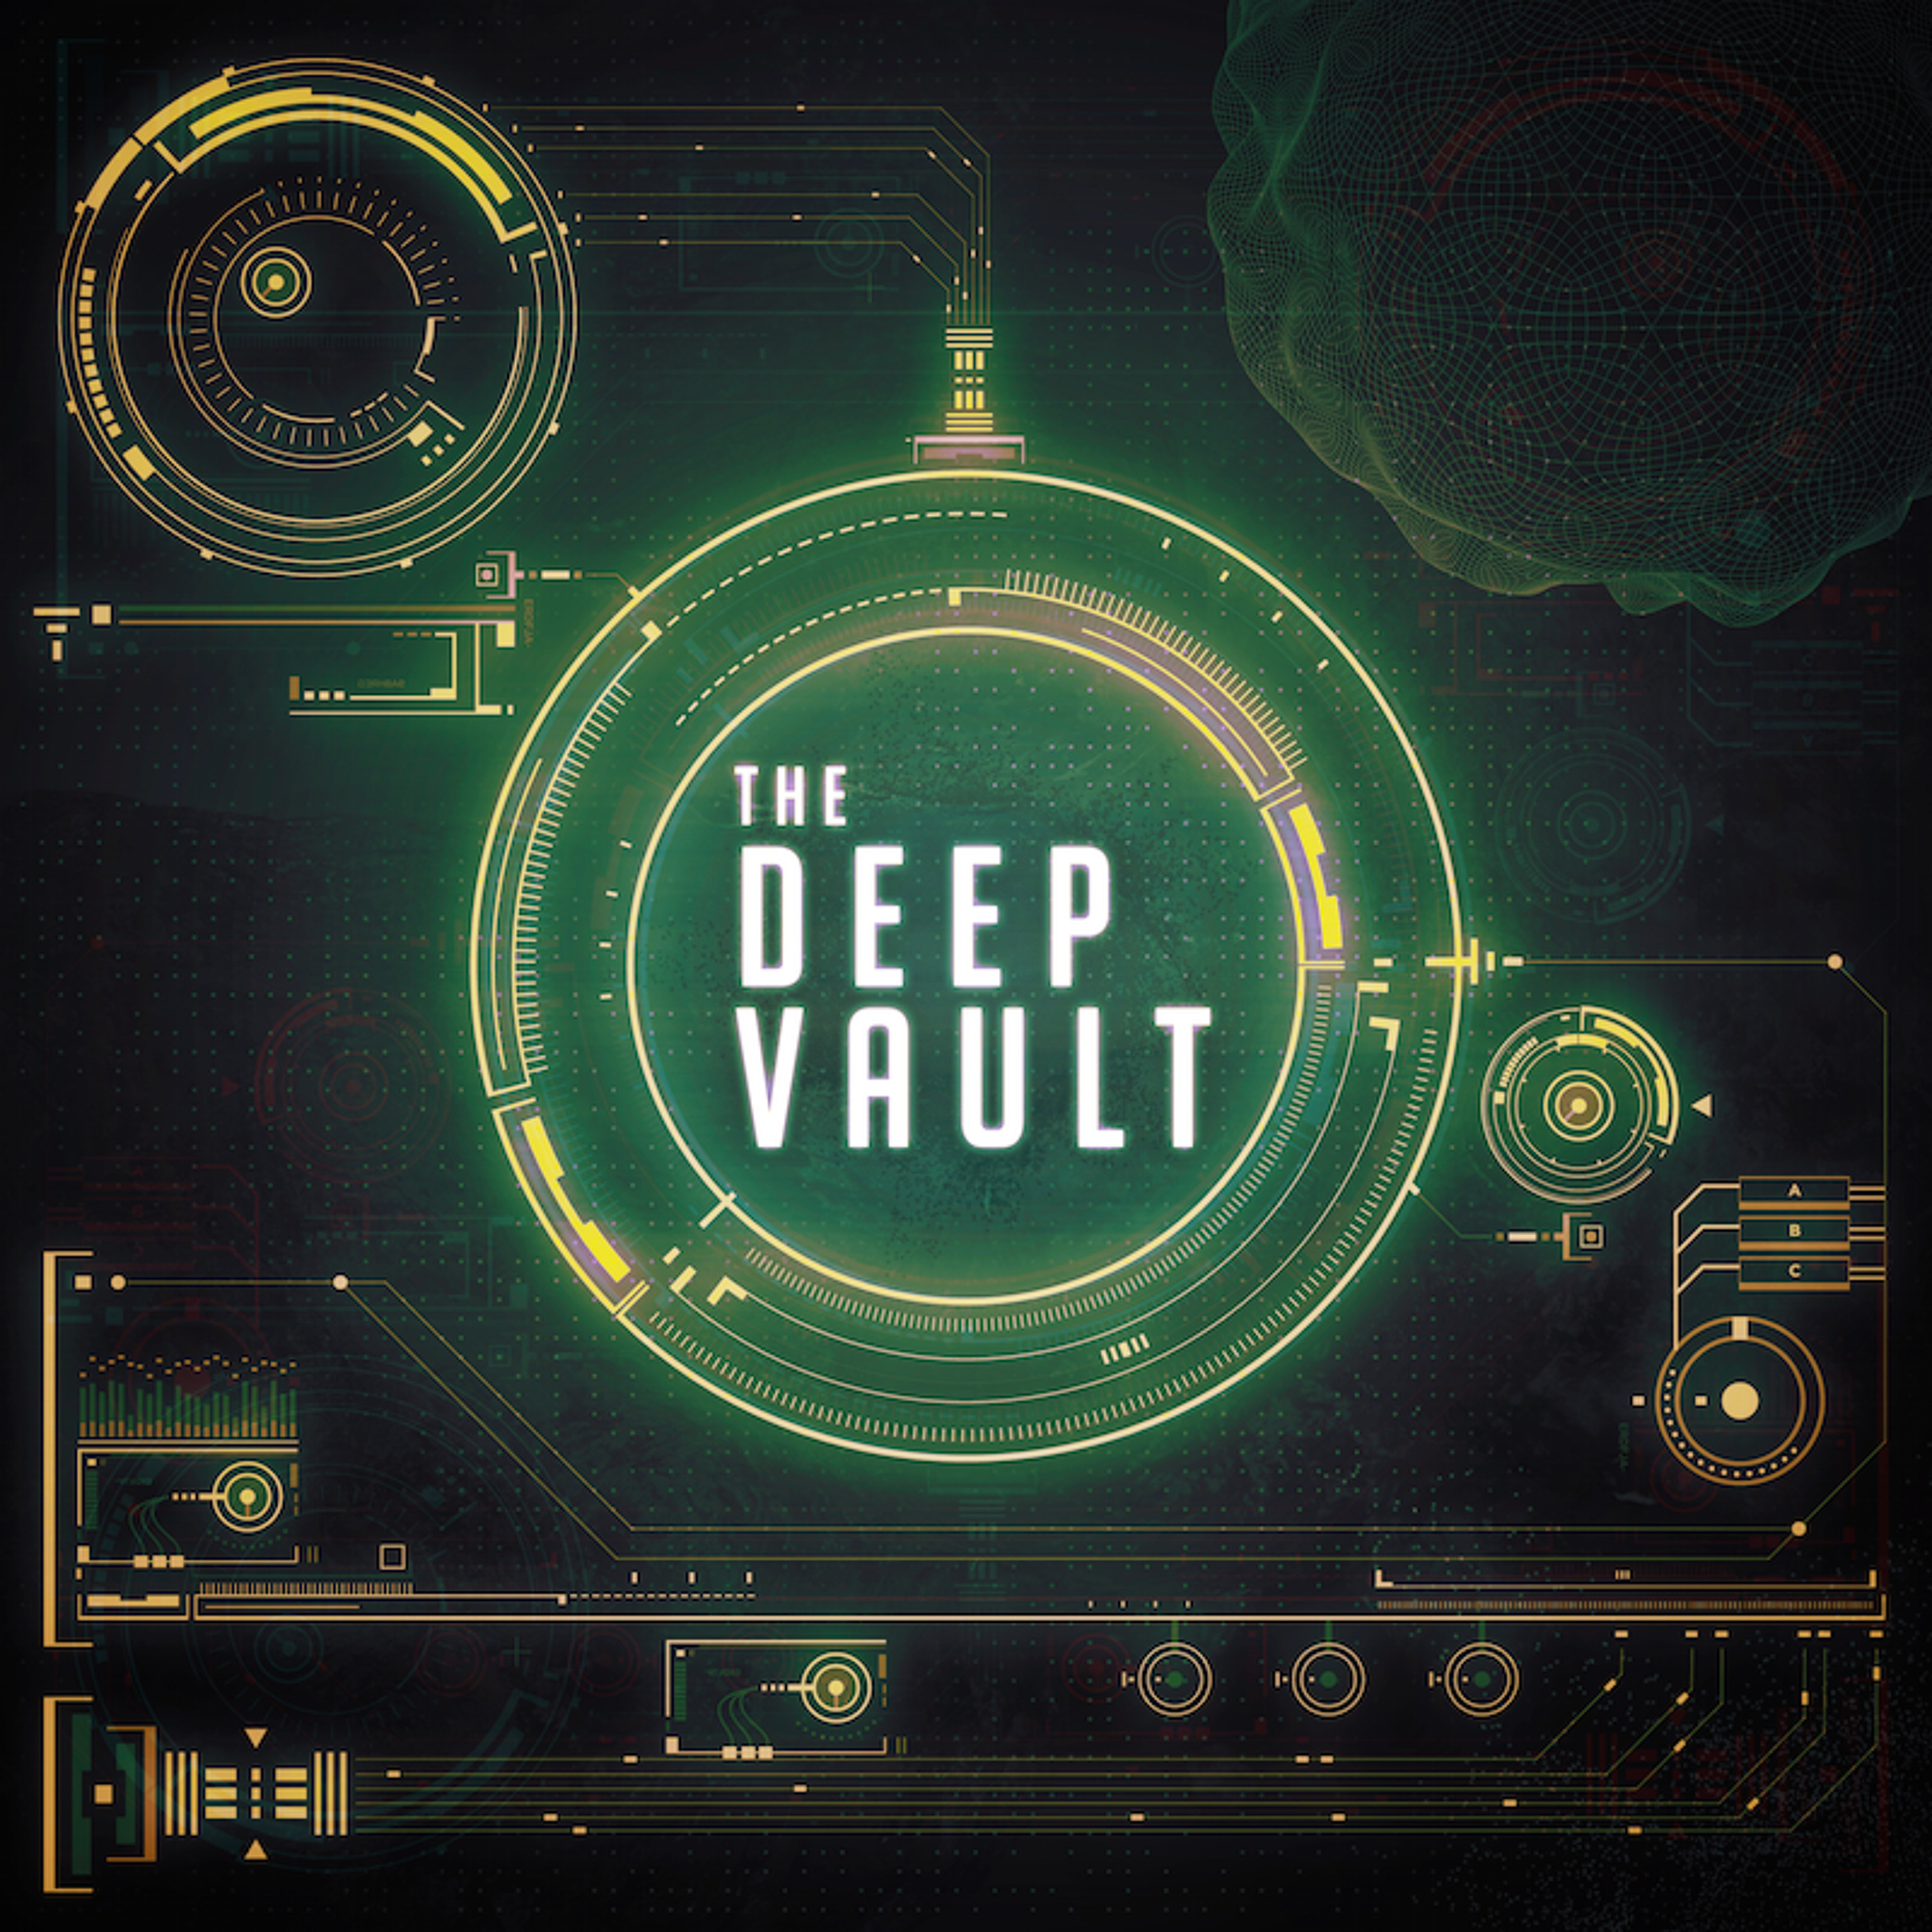 "The Deep Vault" Podcast